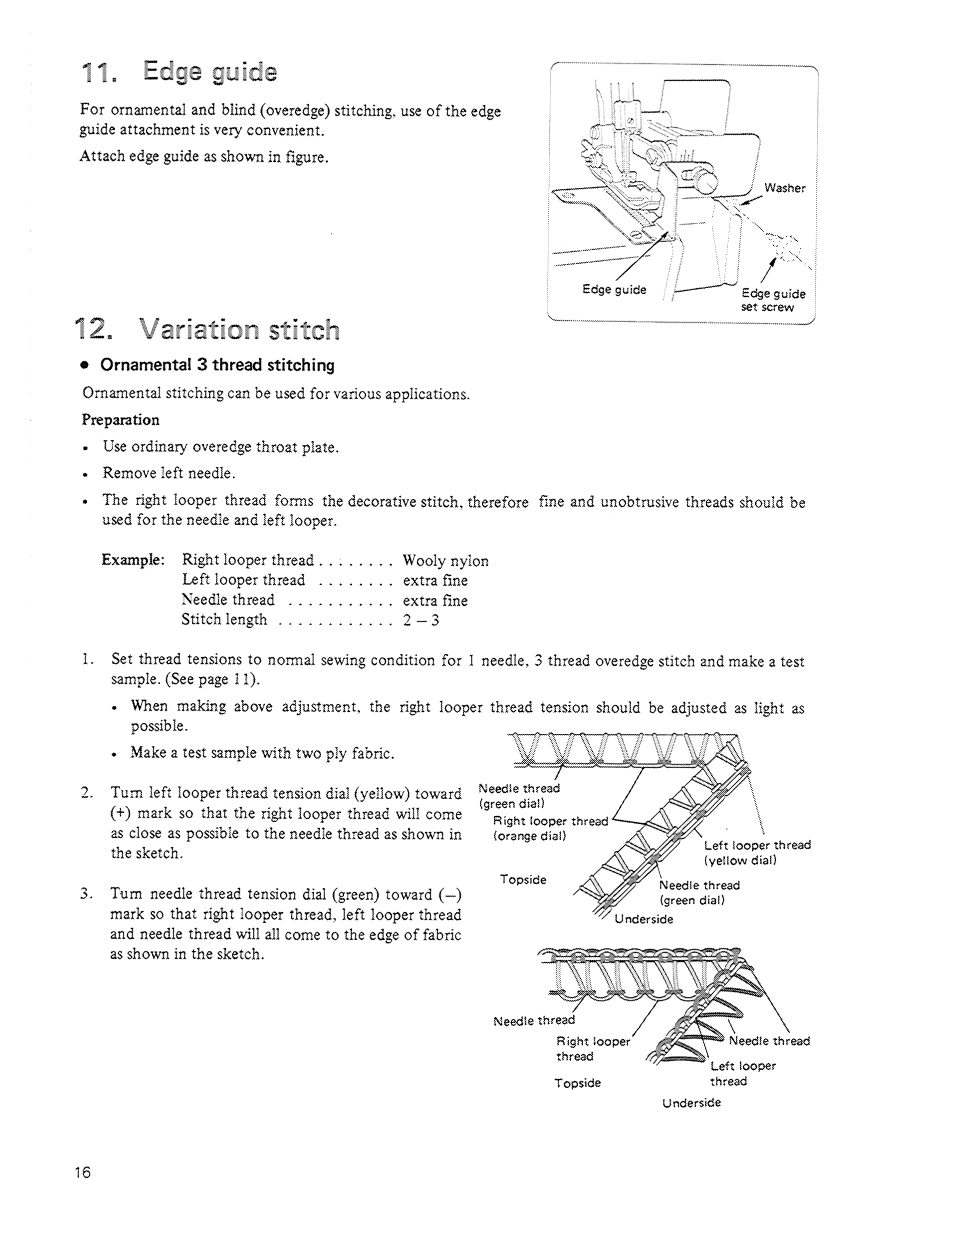 Vcristicn stitch, Ornamental 3 thread stitching, Variation stitch | SINGER 14U64A User Manual | Page 18 / 28